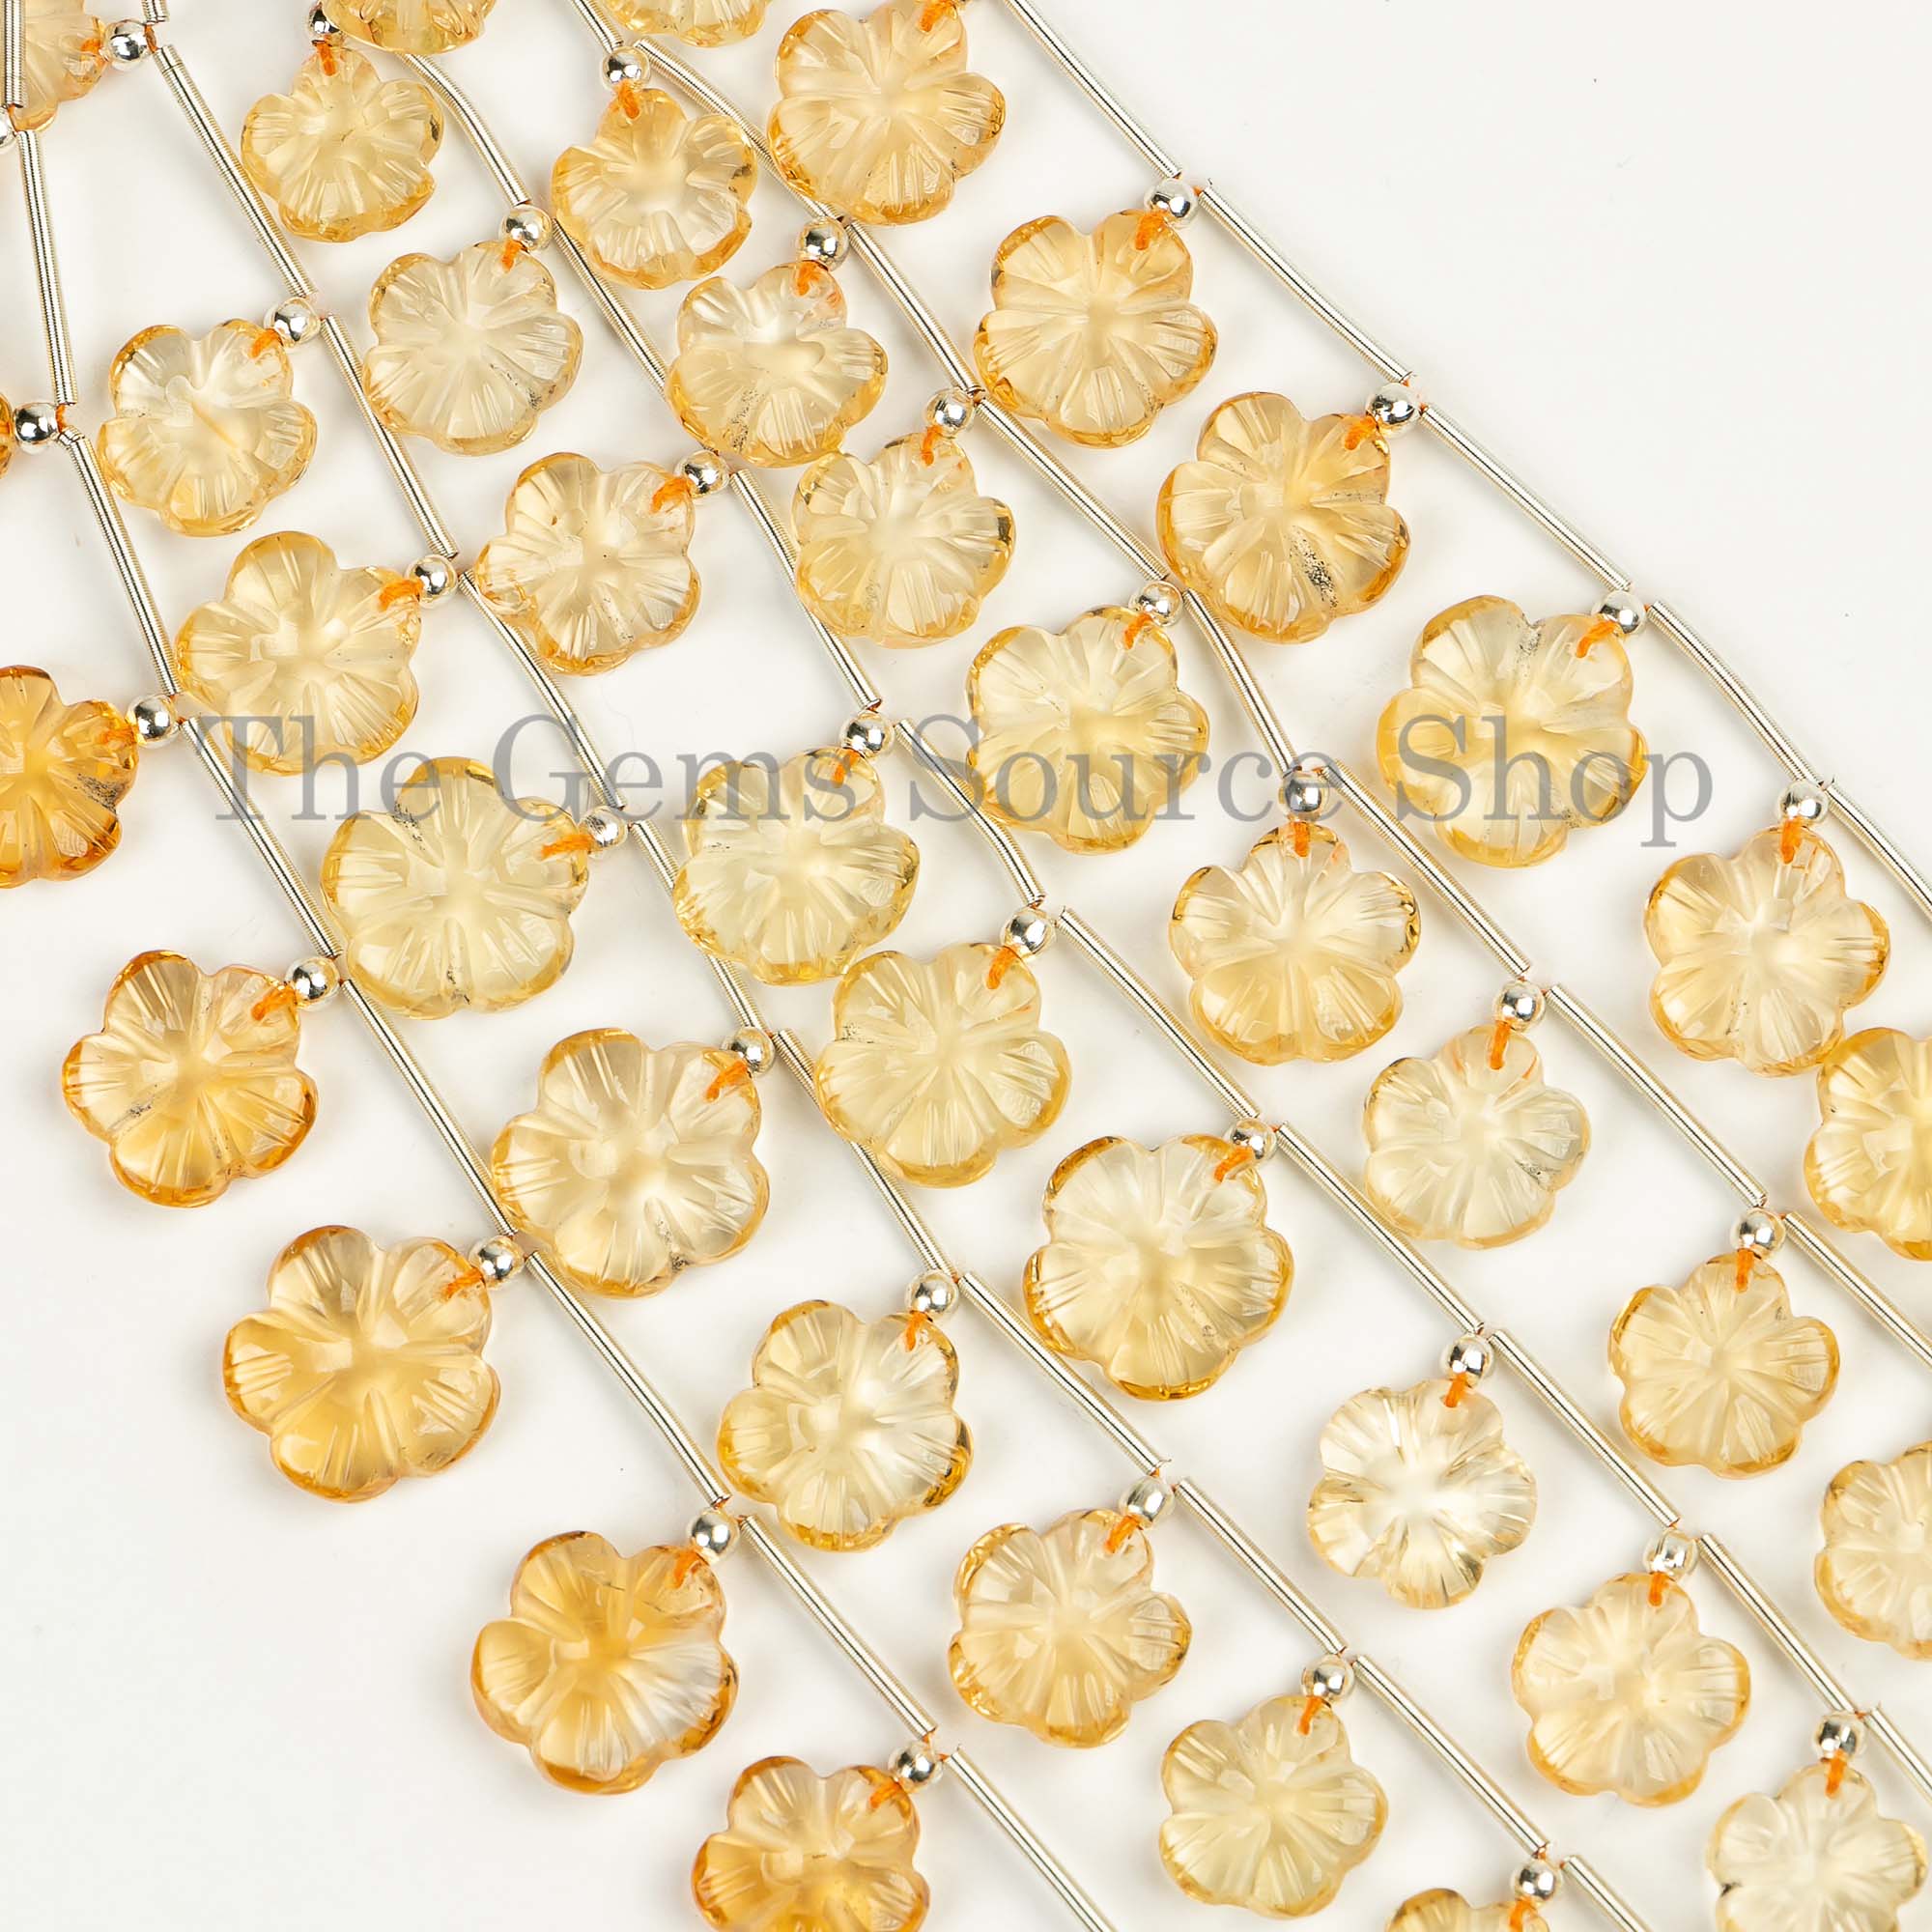 9-12mm Citrine Flower Carving Gemstone Beads, 10 Pieces Citrine Beads, Citrine Flower Beads